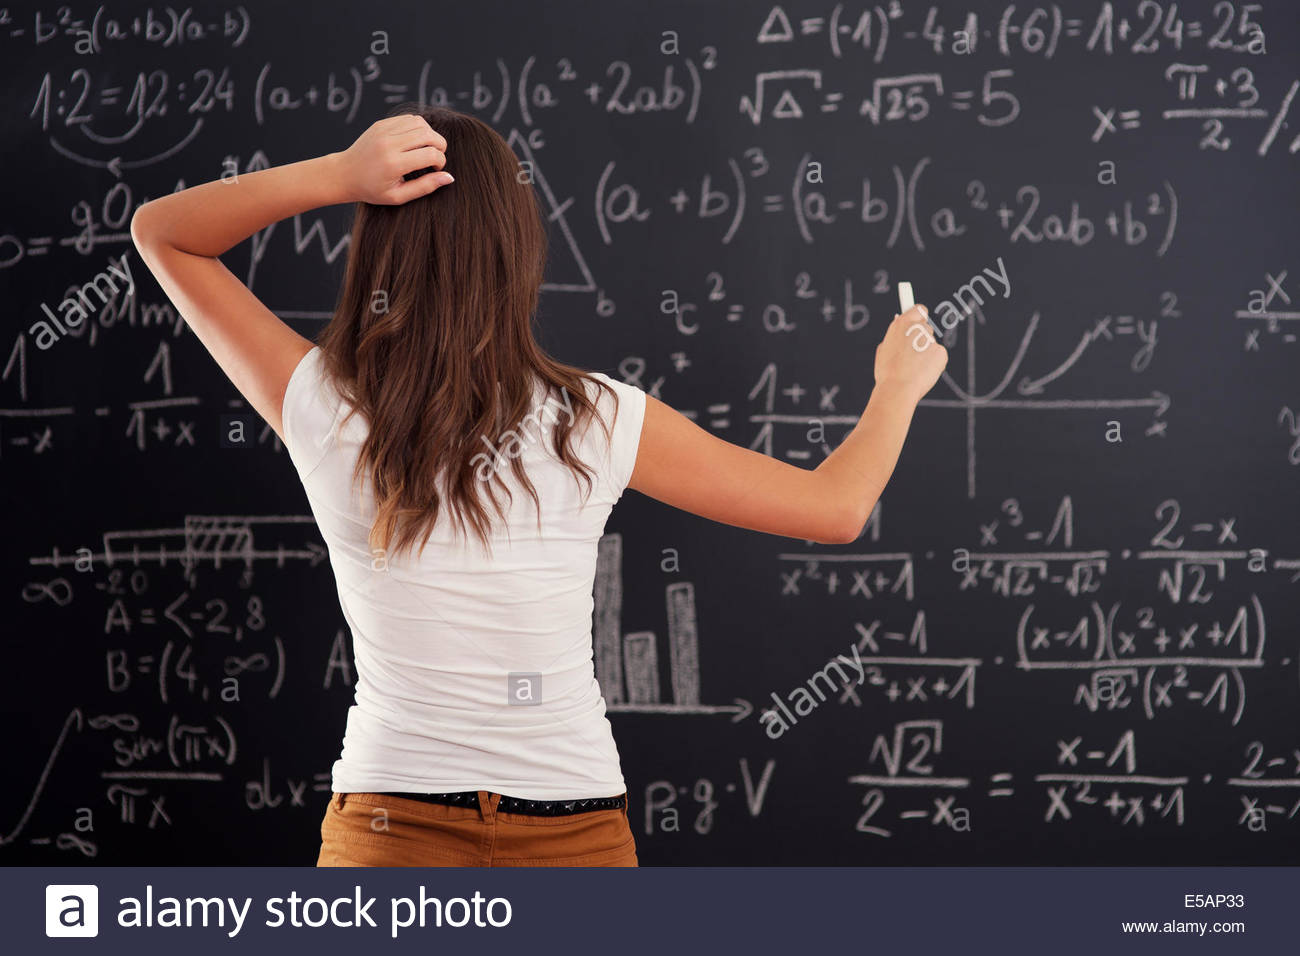 Blackboard Math Problem Stock Photos